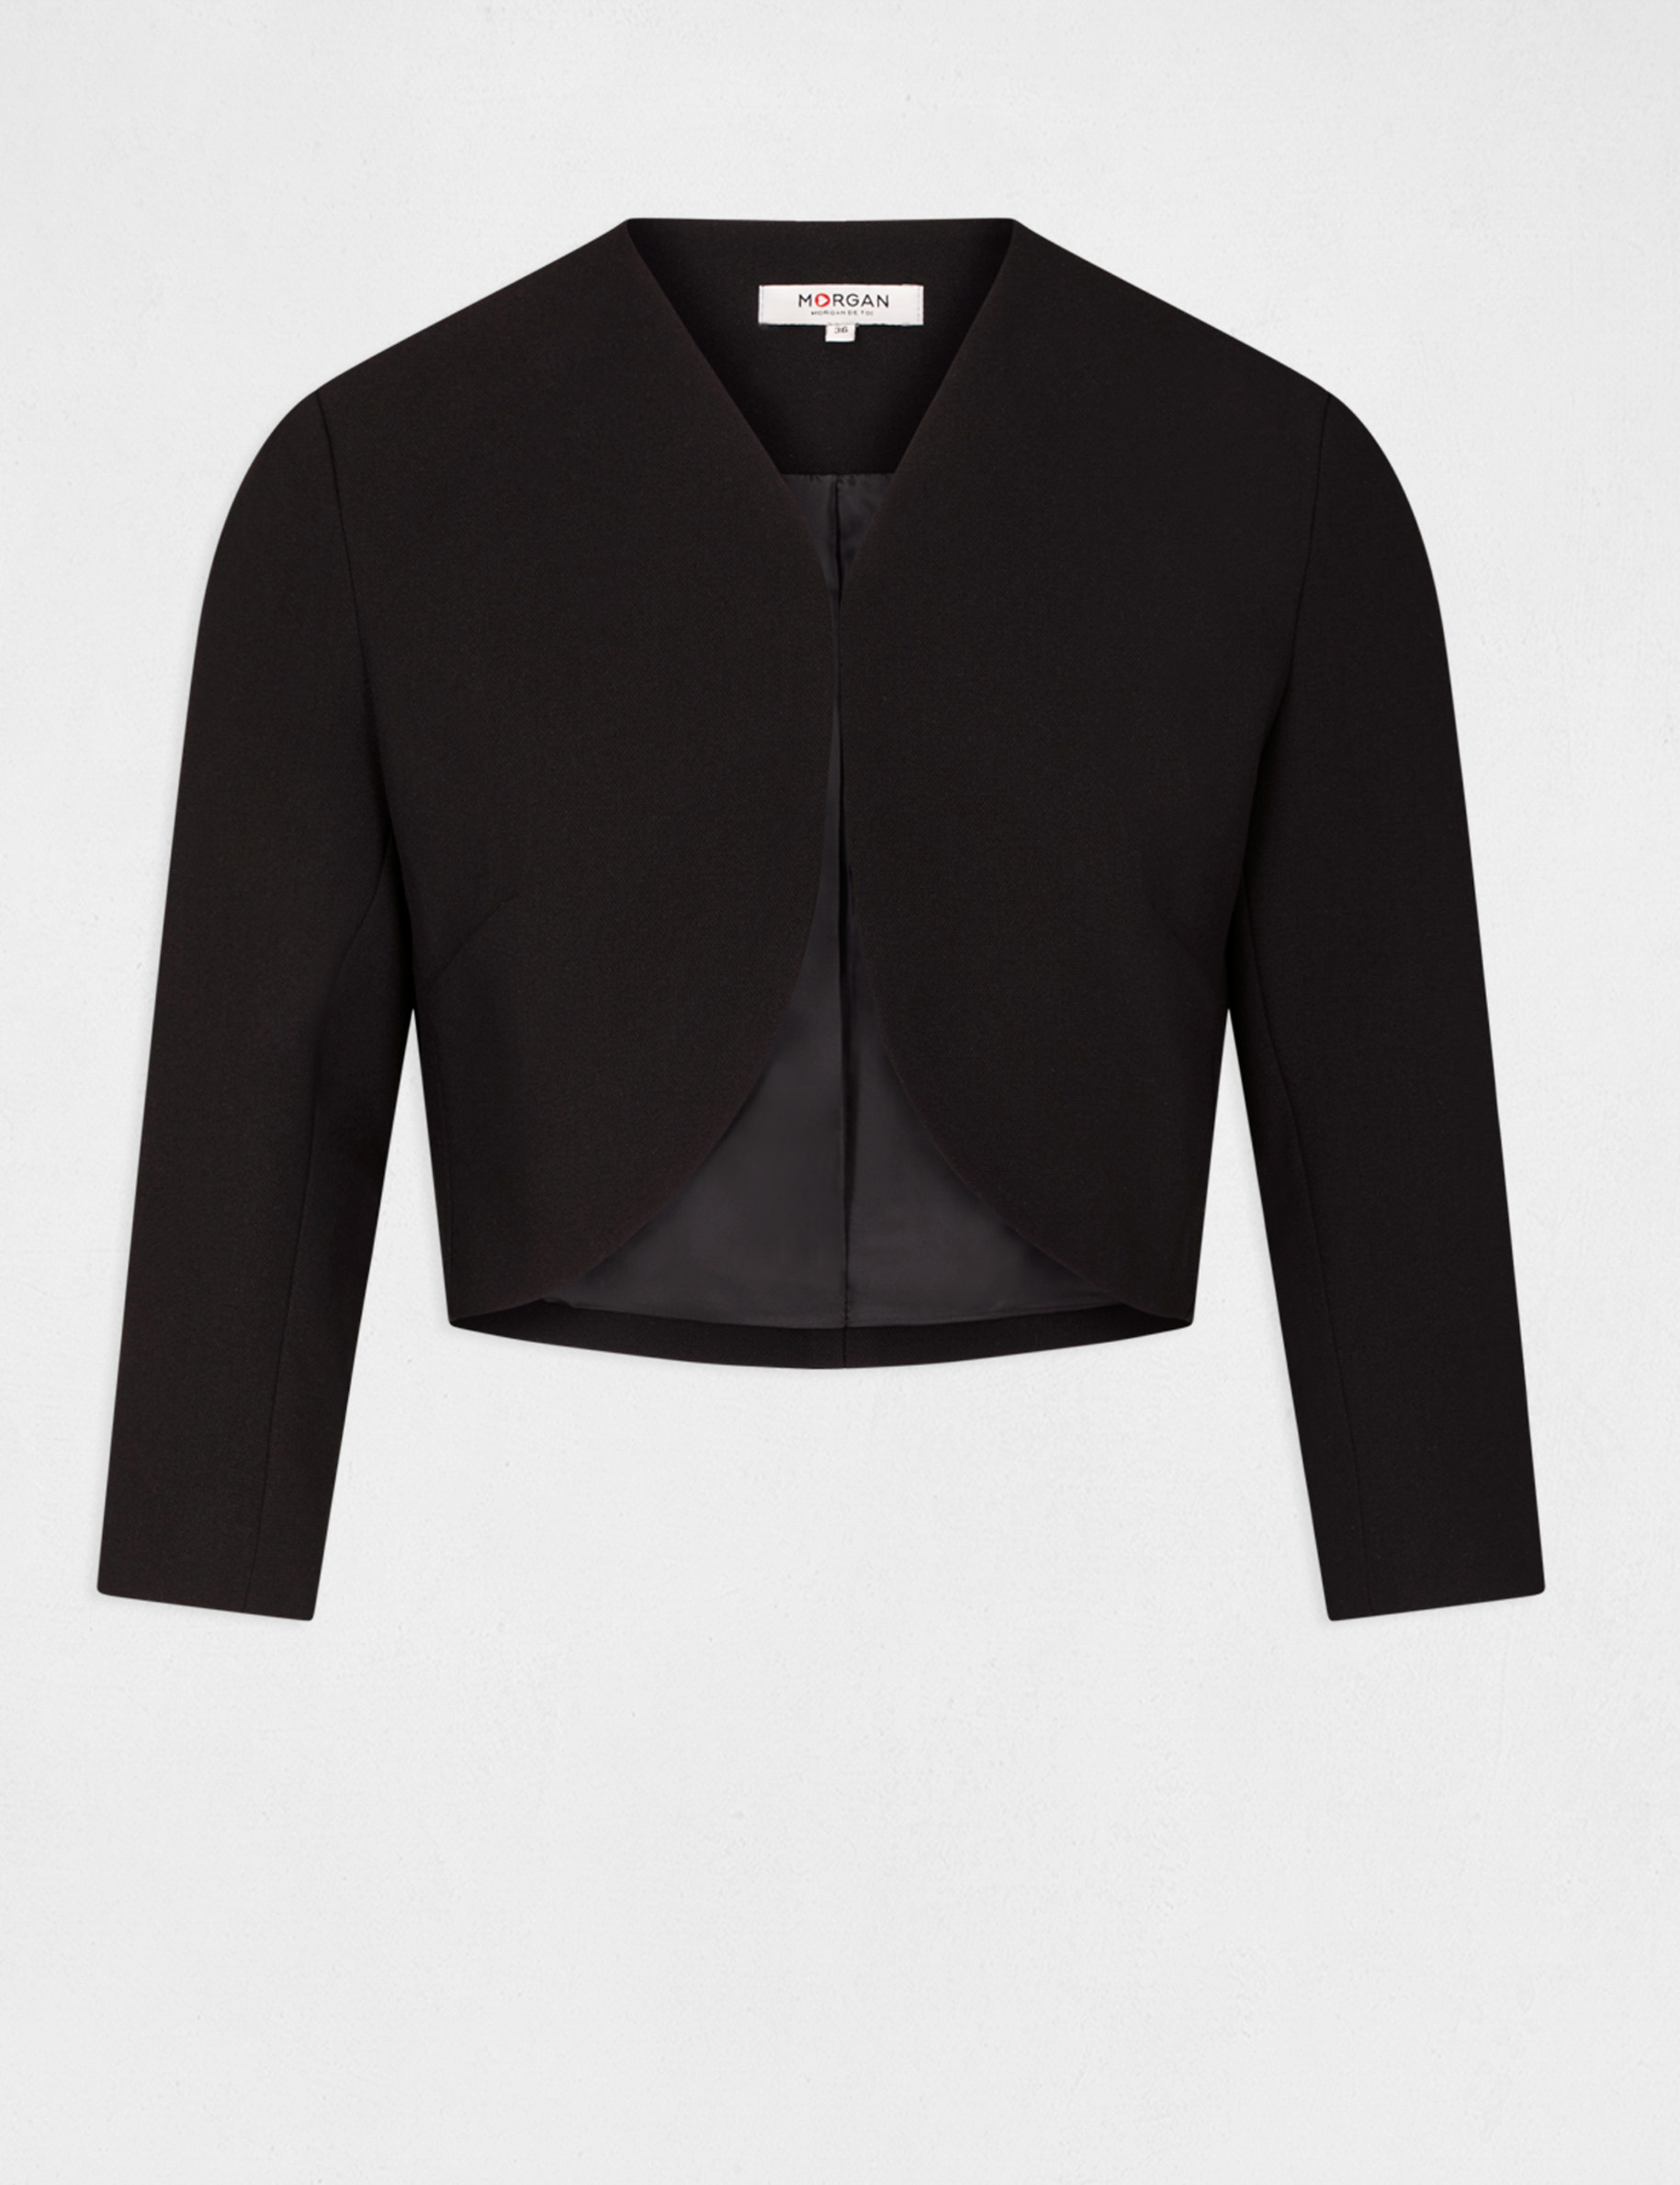 Straight jacket with 3/4-length sleeves black ladies'